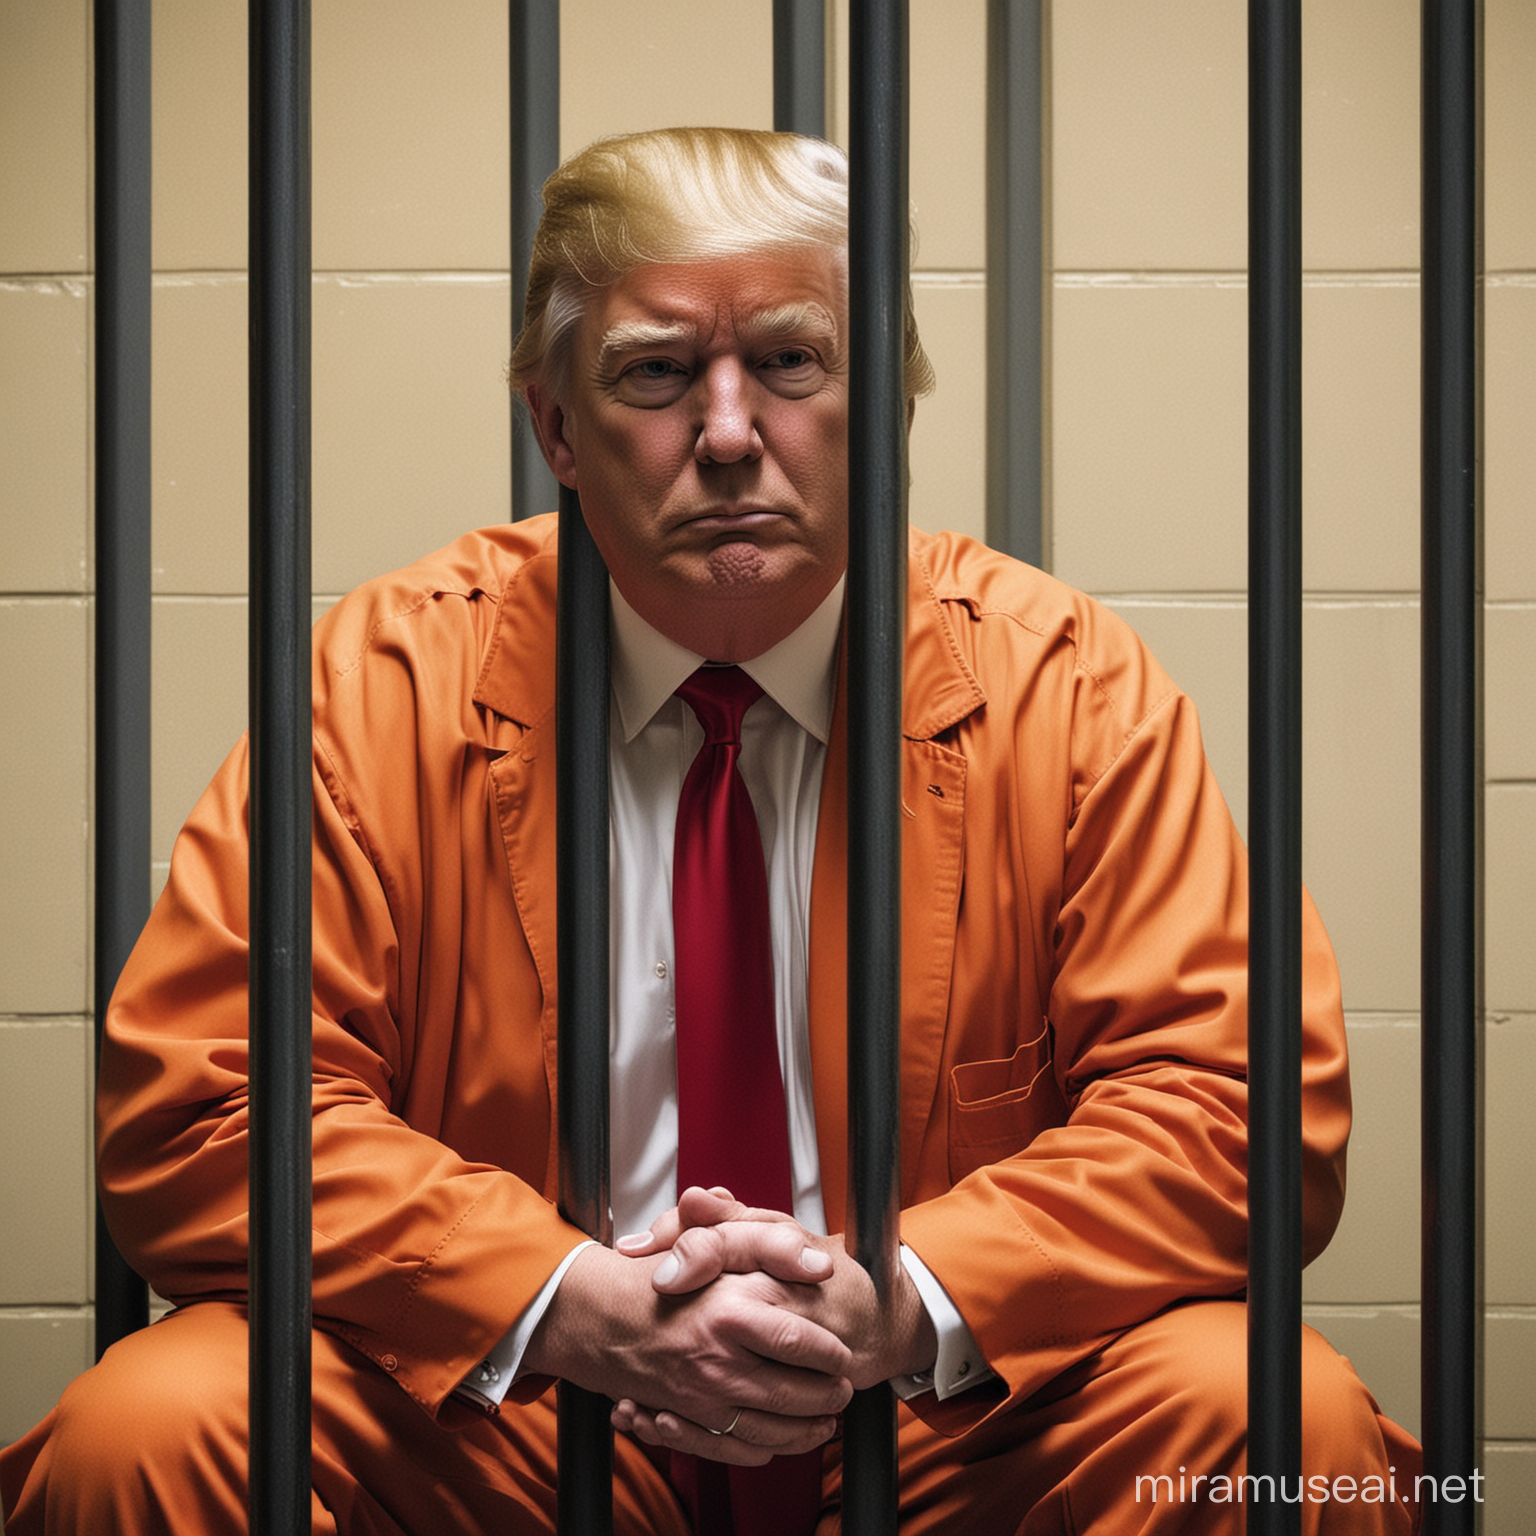 Donald Trump sitting in jail